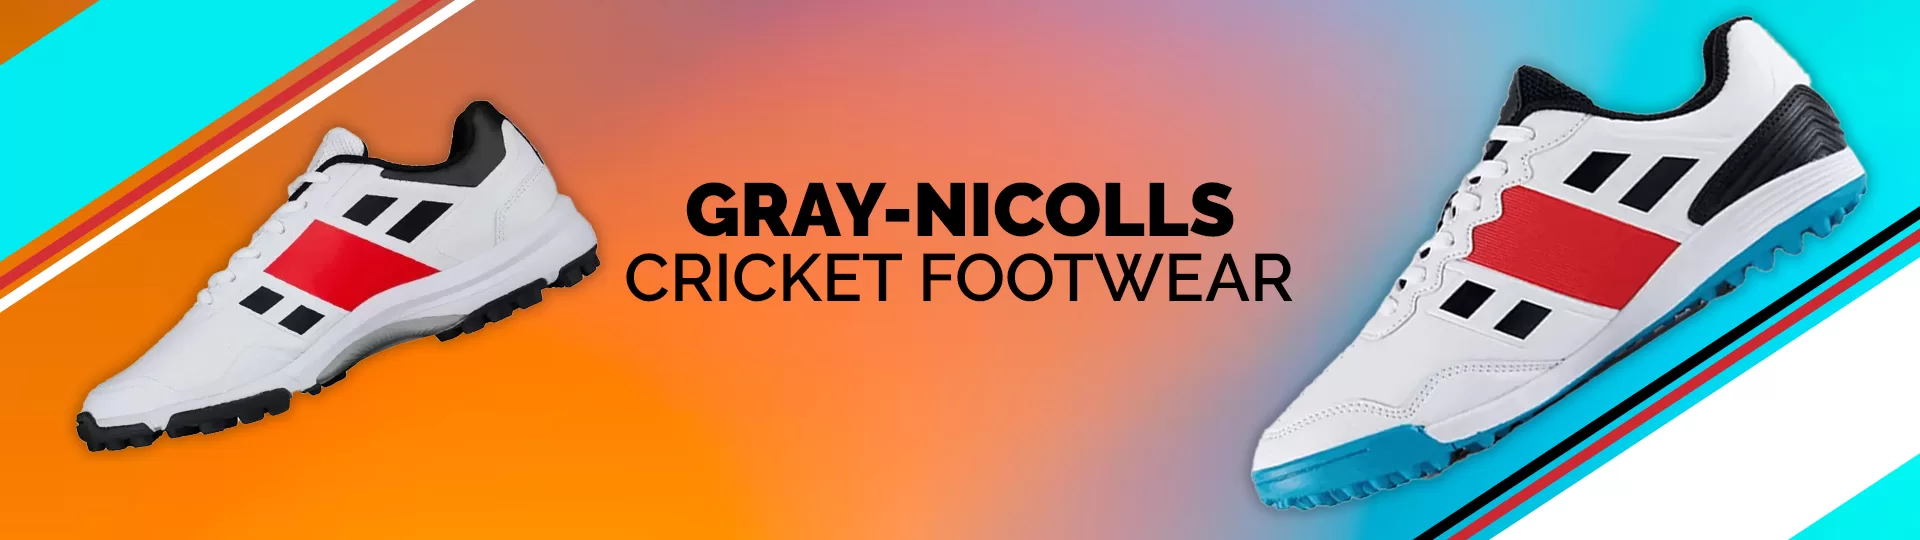 Gray-Nicolls Cricket Footwear